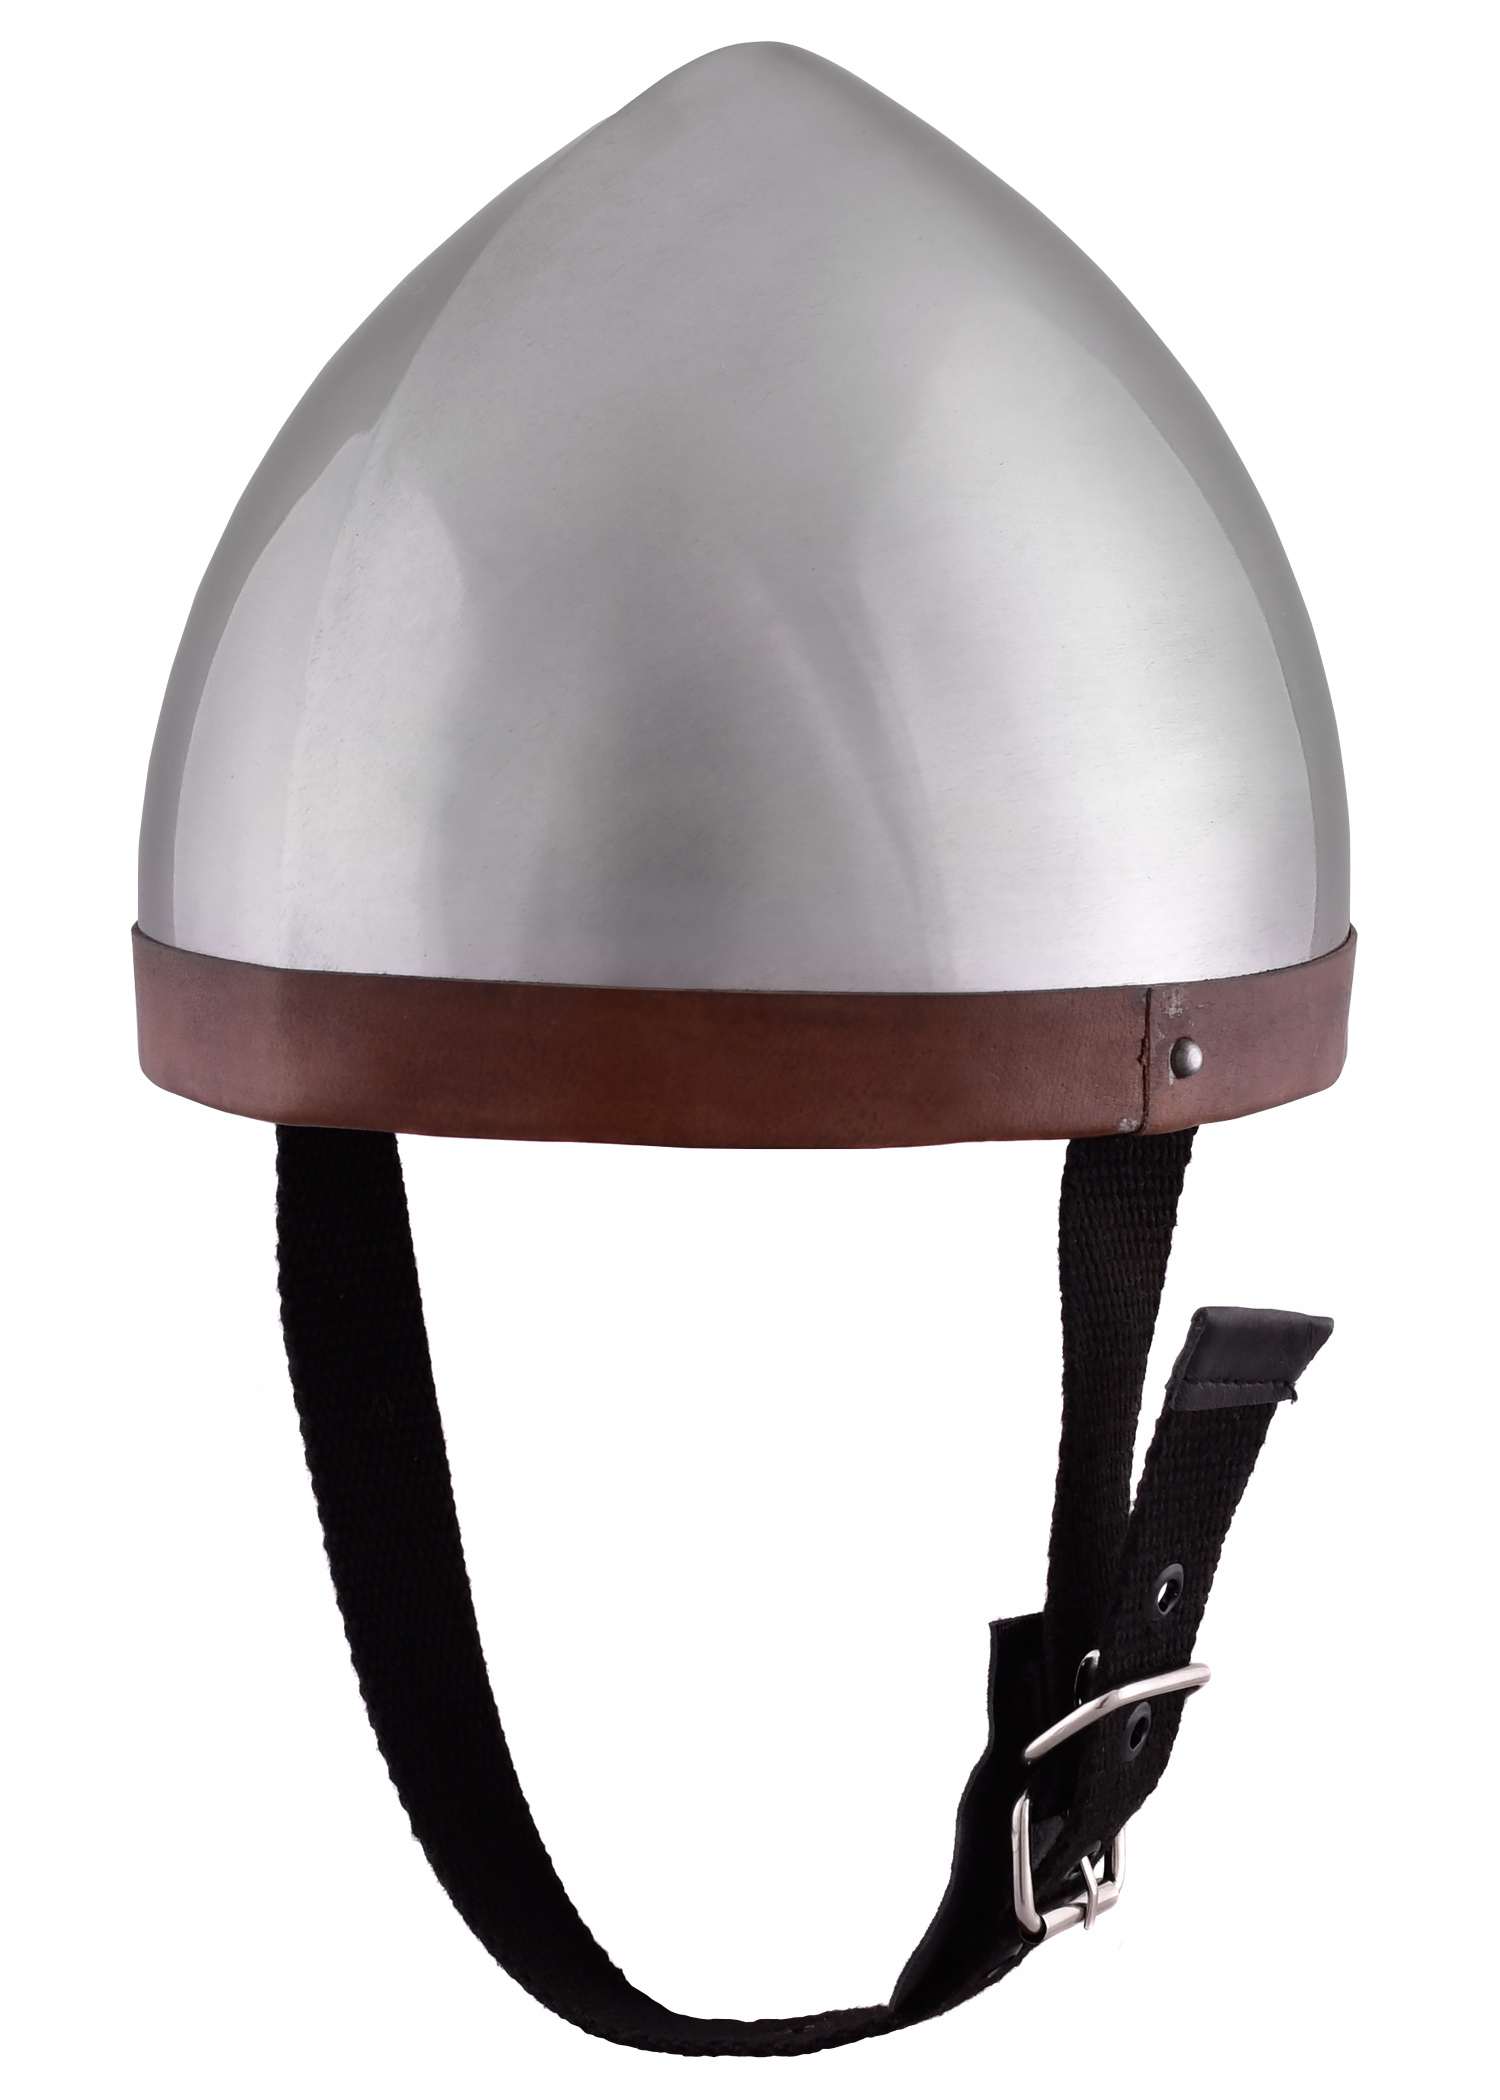 RFB Helm aus Stahl, Gr. M